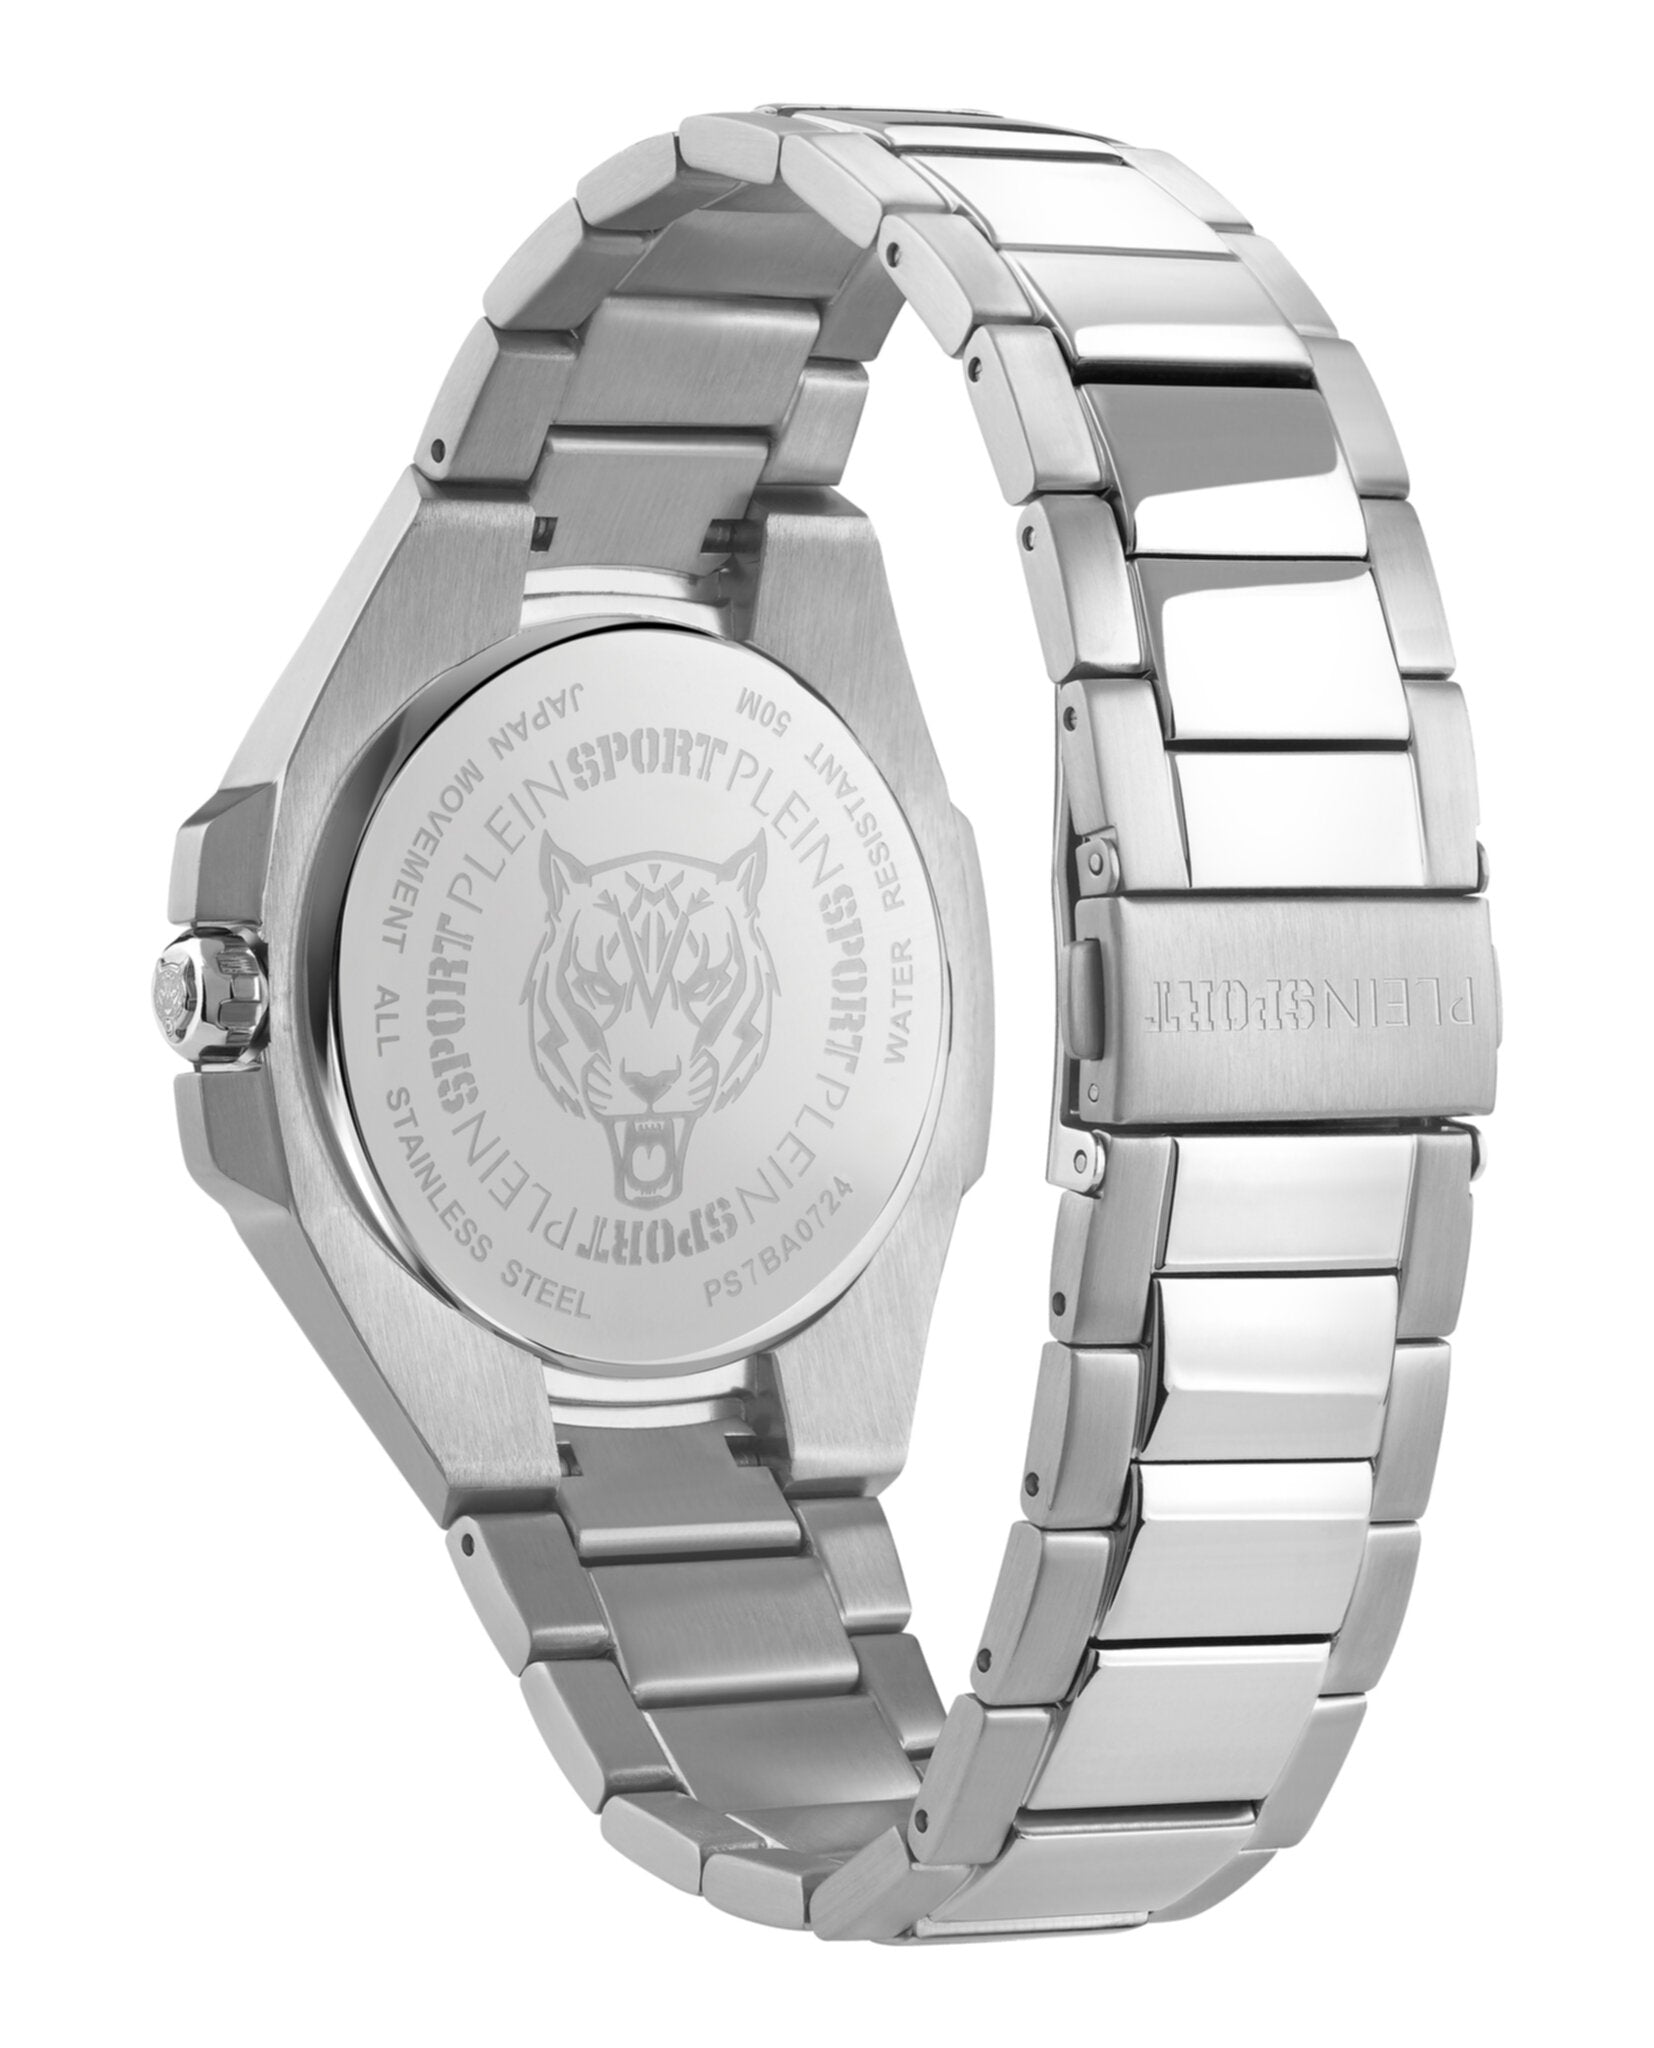 Tigermaster Bracelet Watch